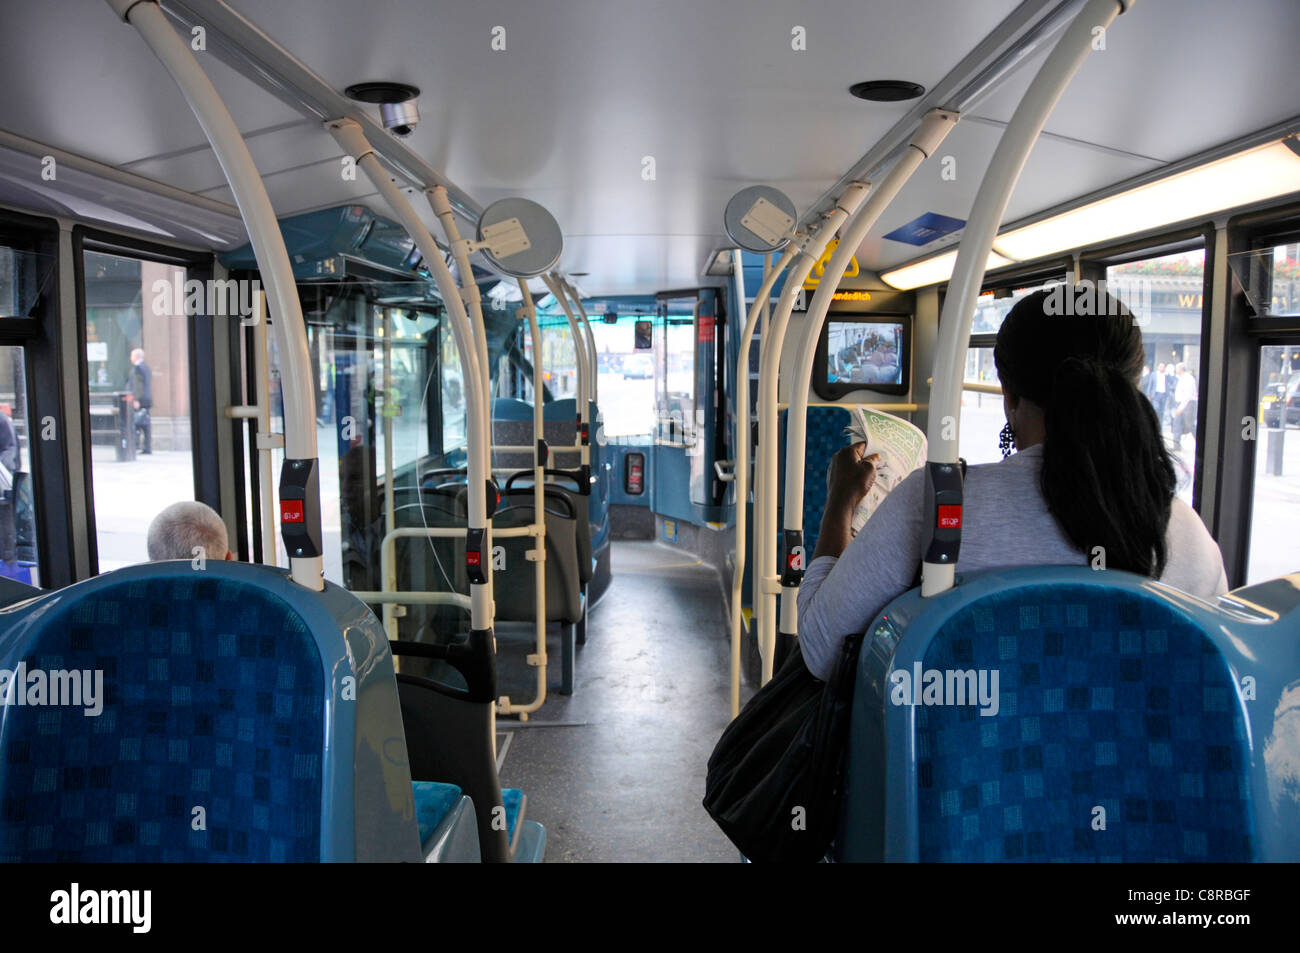 Interior Of Public Transport Single Deck London Bus